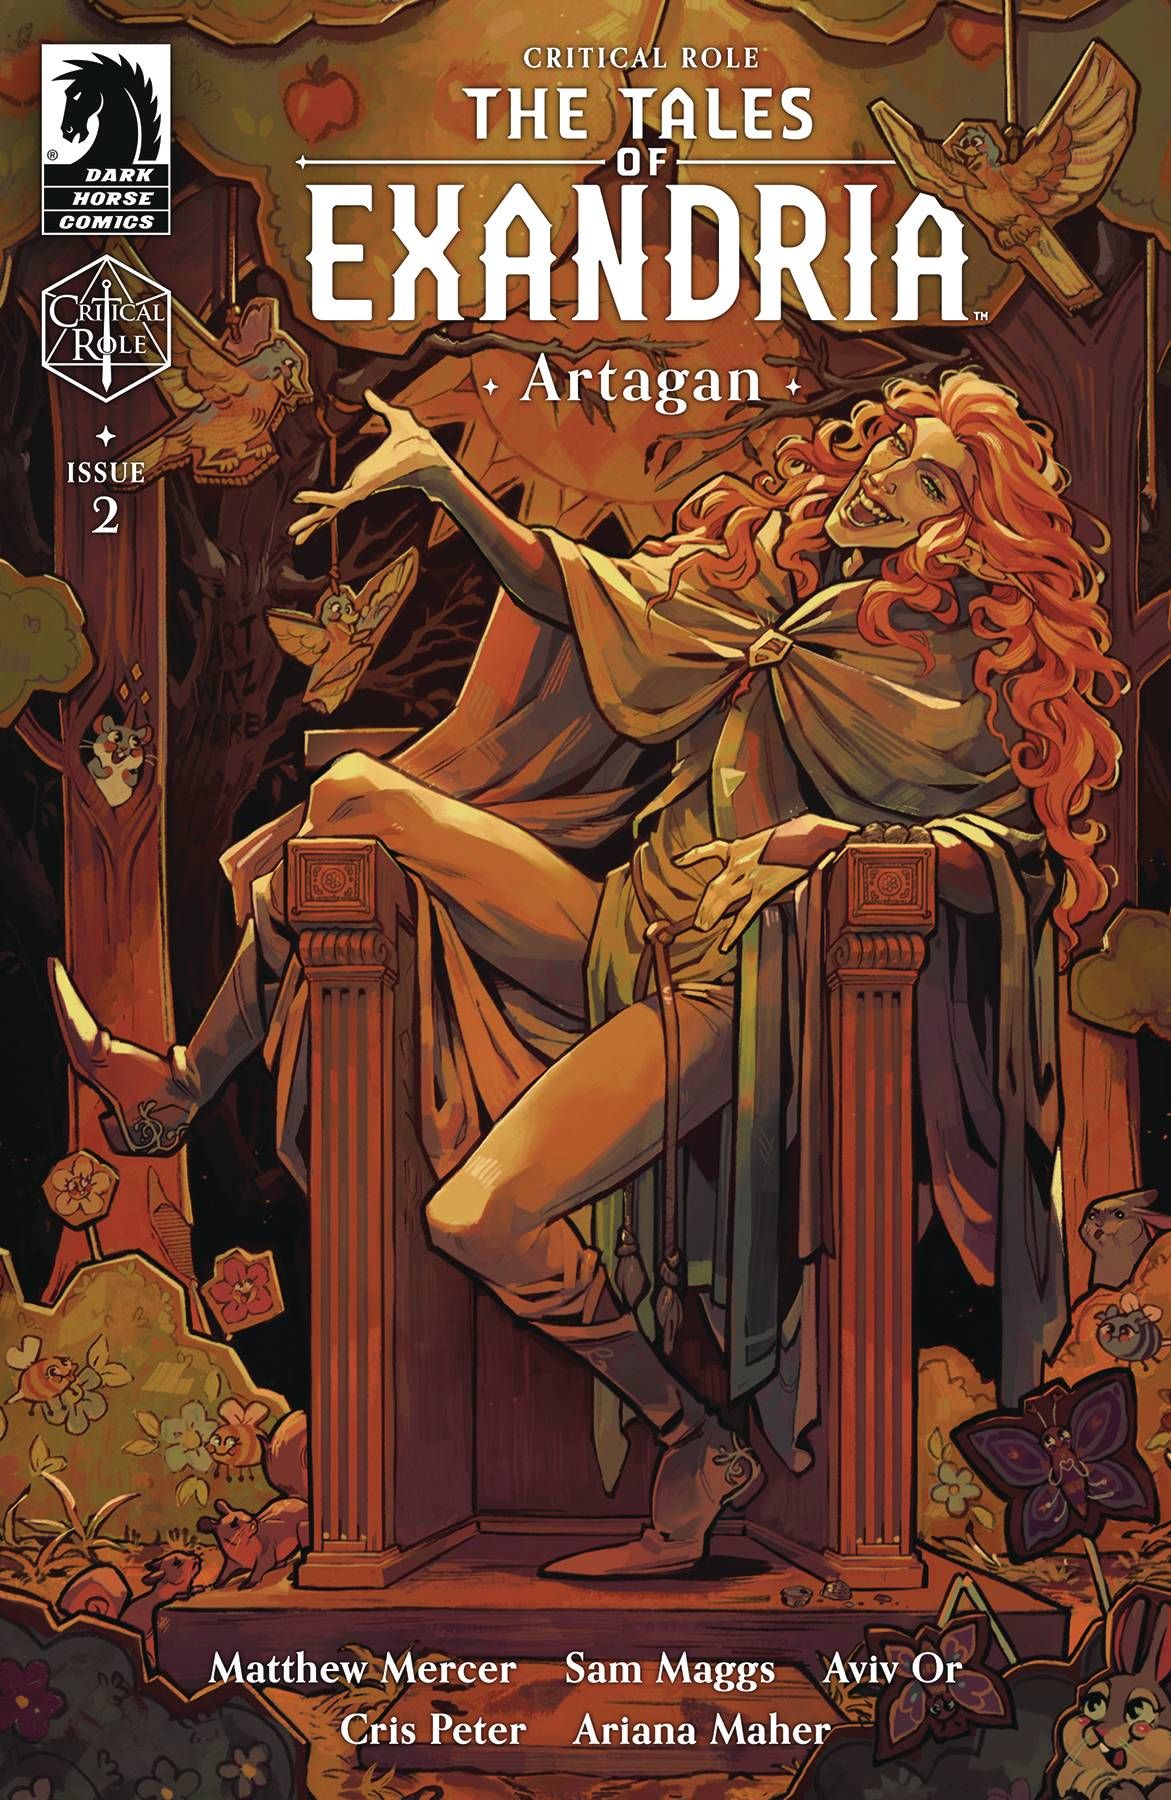 Critical Role: The Tales of Exandria - Artagan #2 Comic